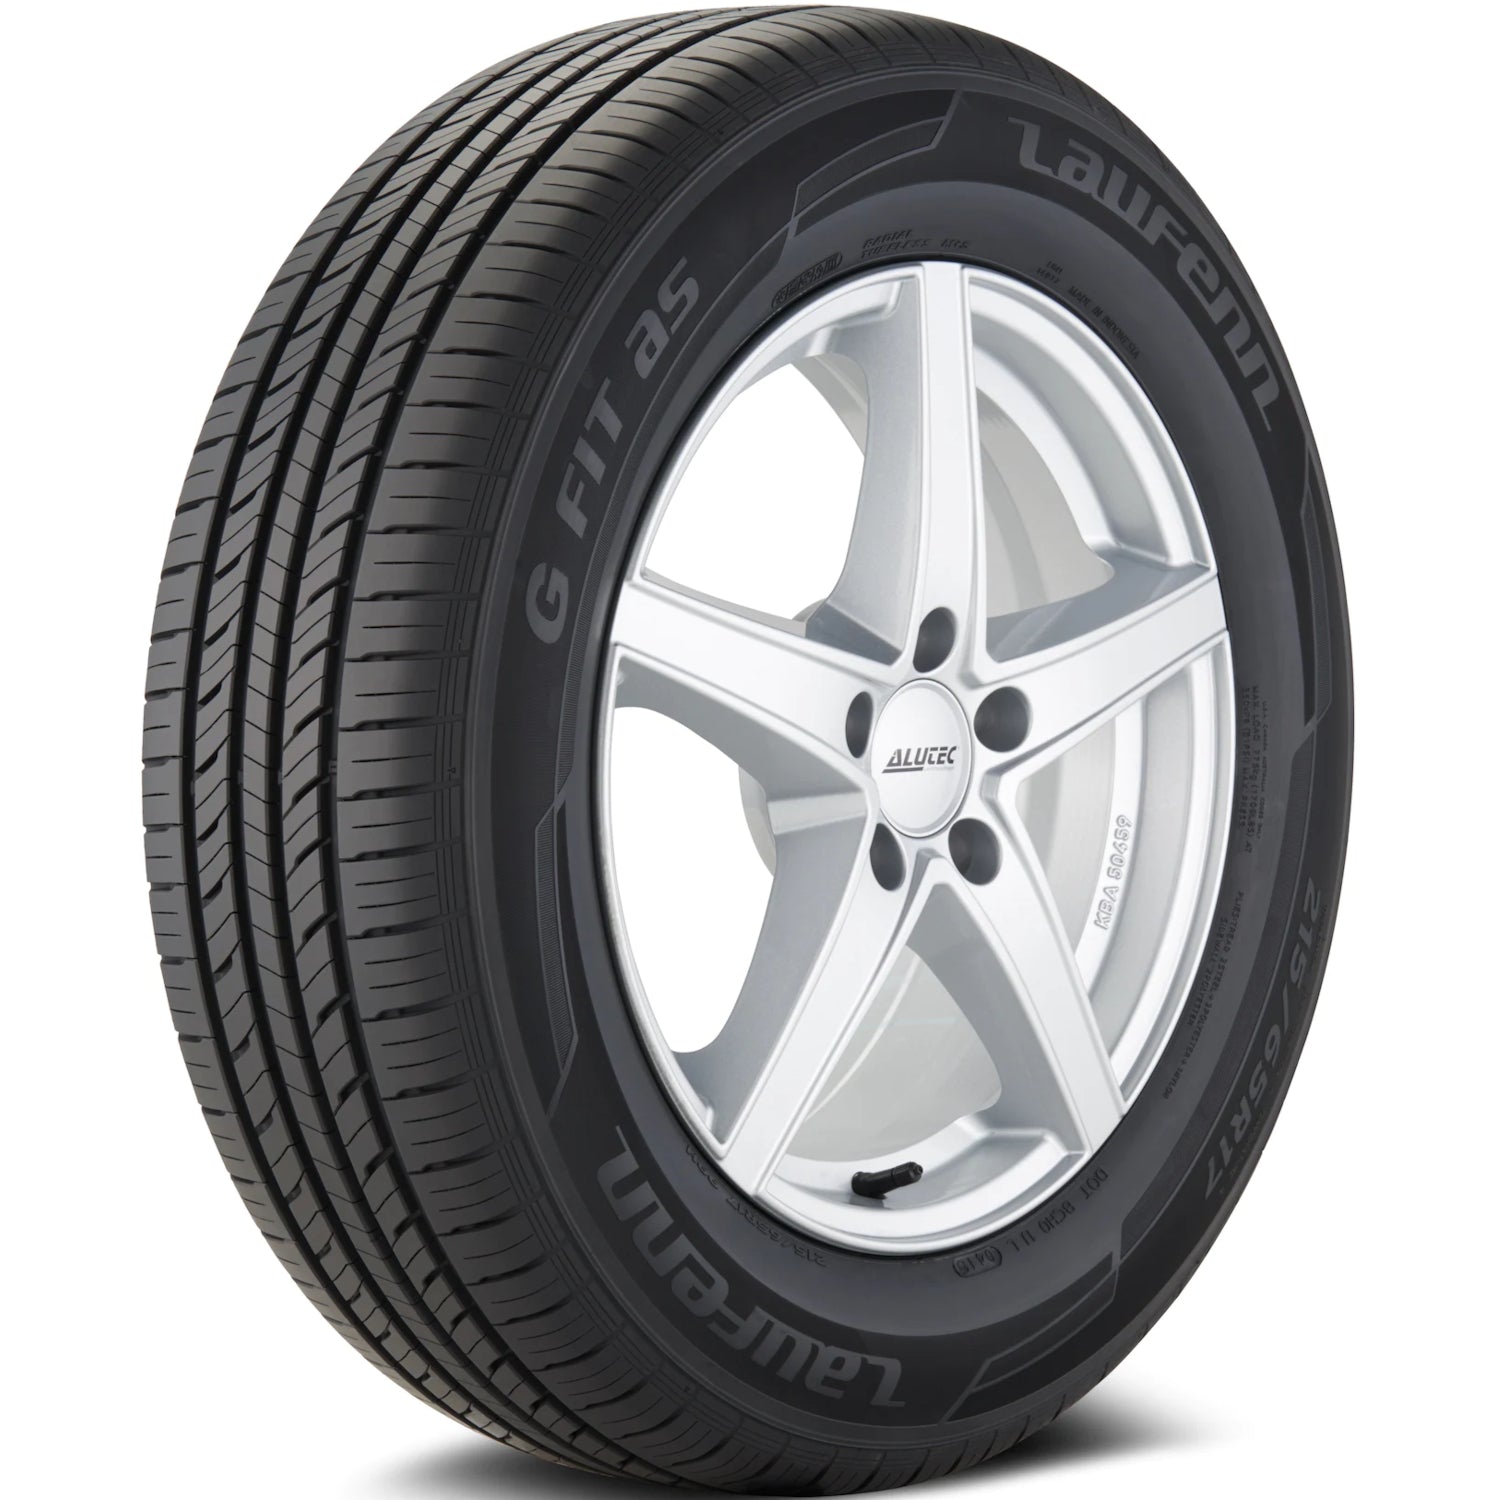 LAUFENN G FIT AS 215/65R17 (28X8.5R 17) Tires